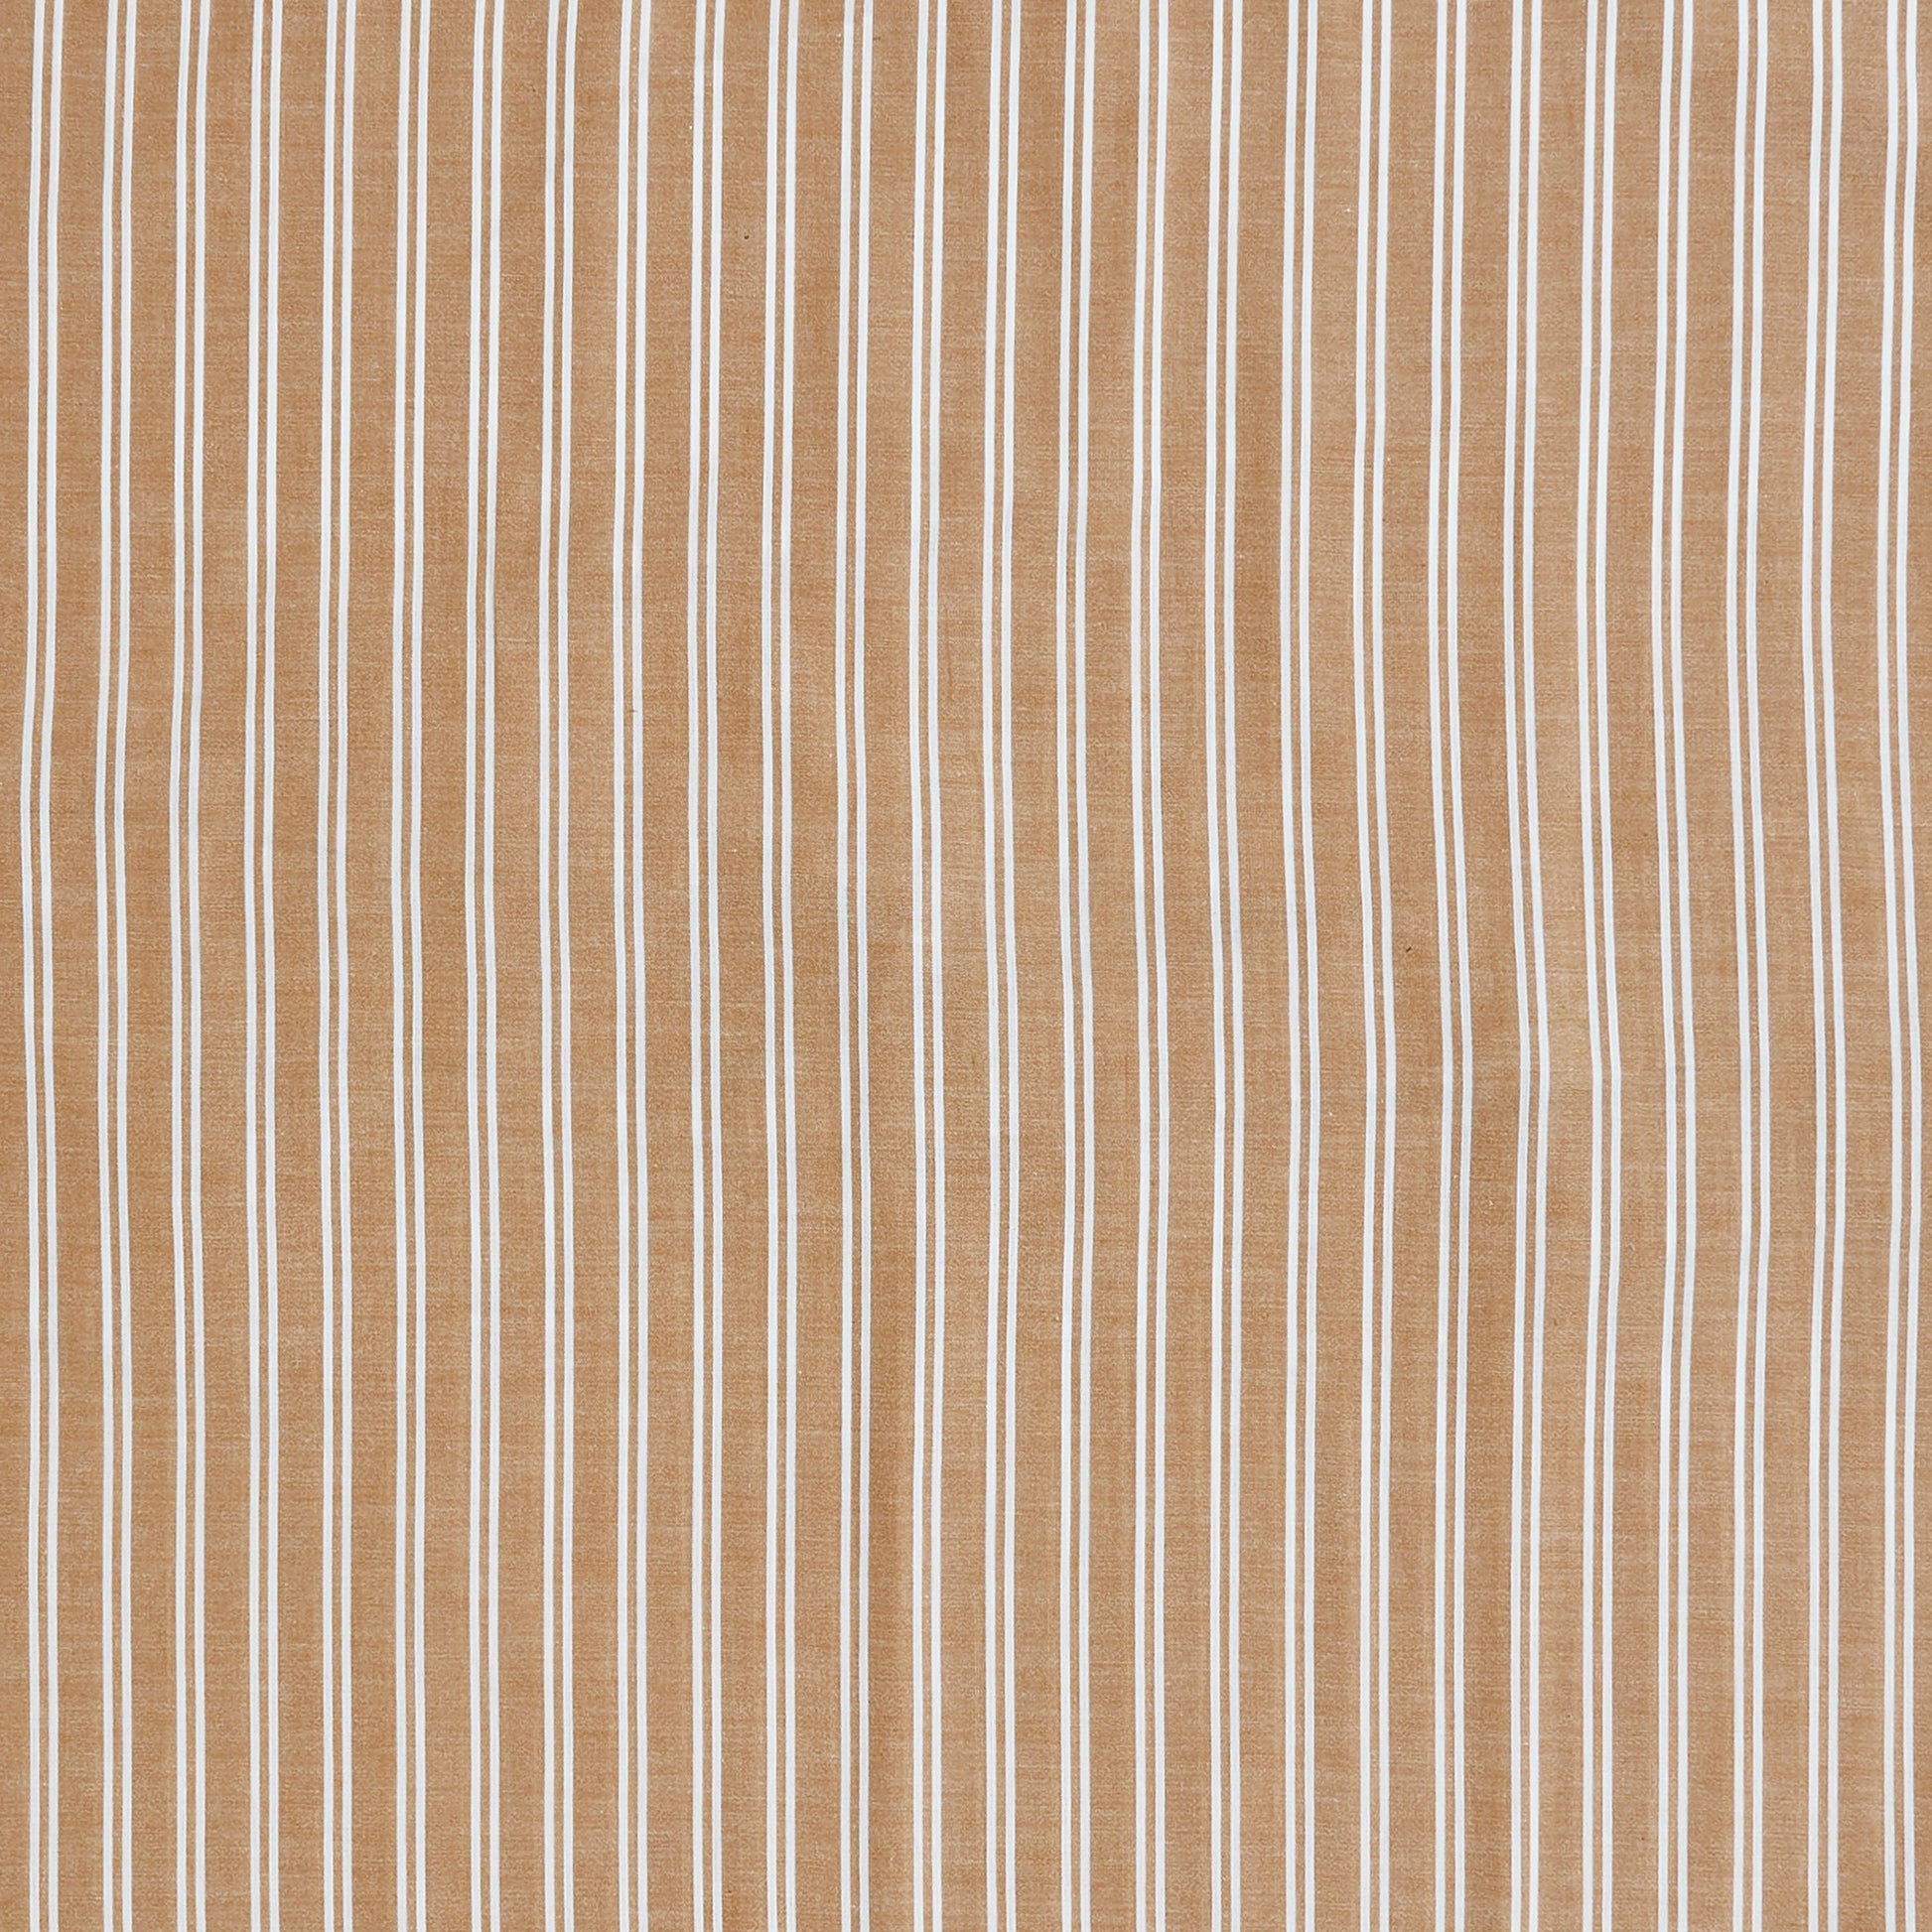 Farmhouse Euro Sham 26x26 Dorset Striped Ruffled Creme Tan Bedroom Dec –  VHC Brands Home Decor